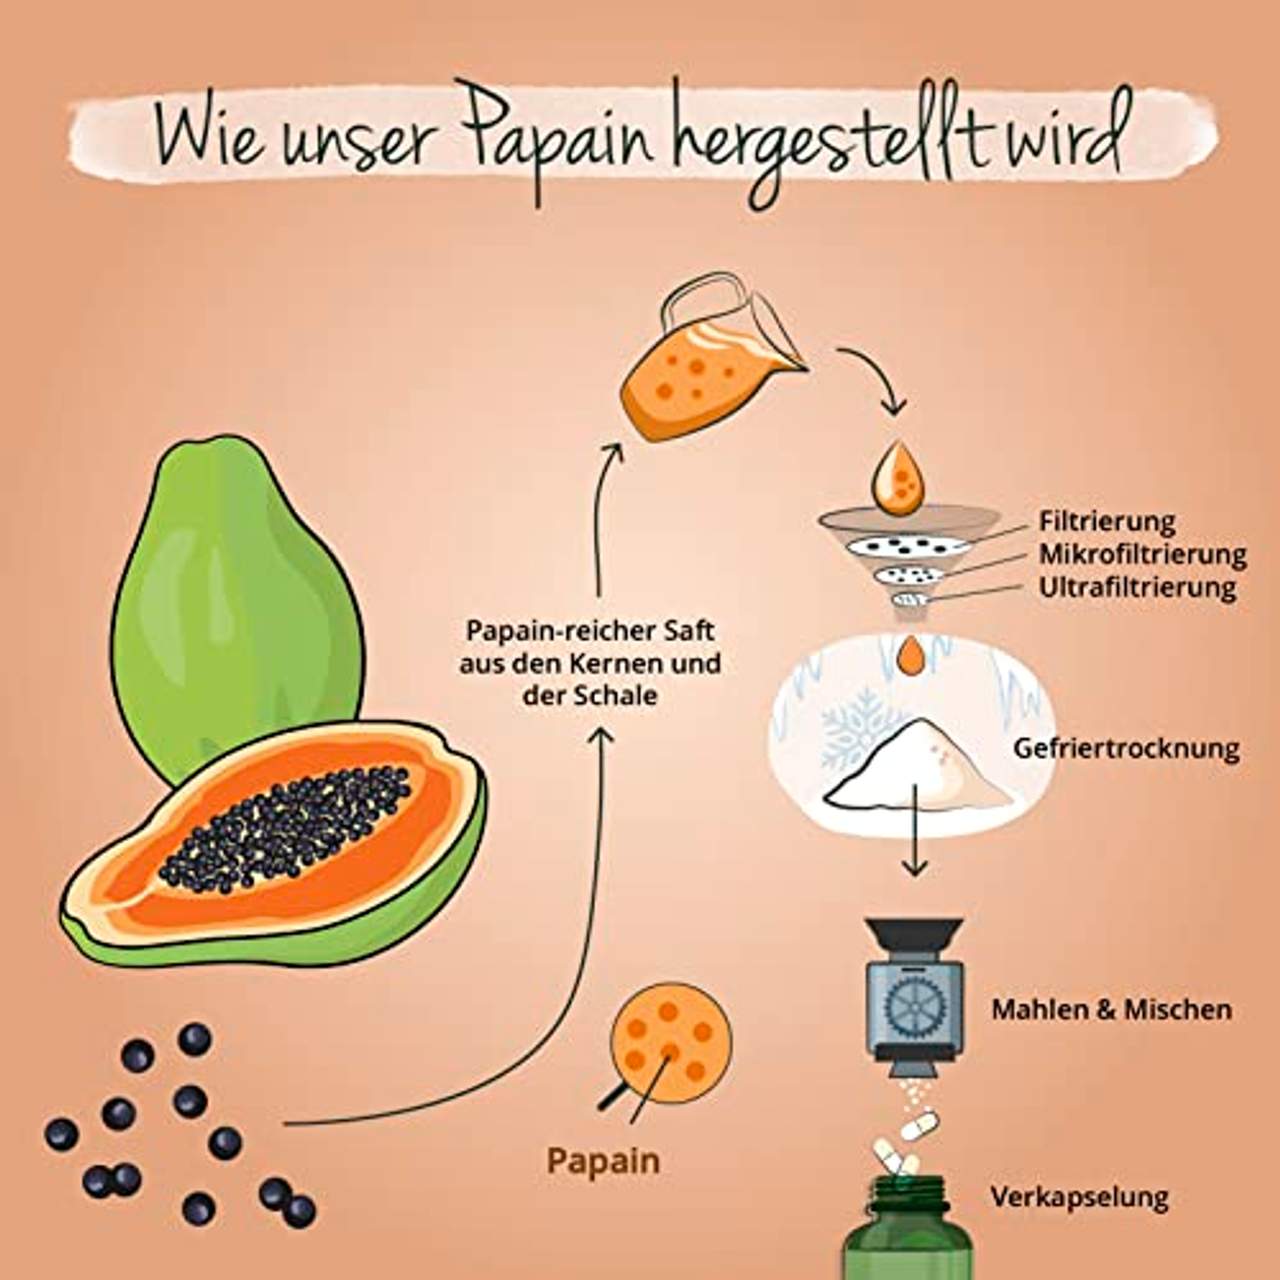 Papaya Enzym Vegavero HOCHDOSIERT: 1500 mg Papain pro Tagesdosis